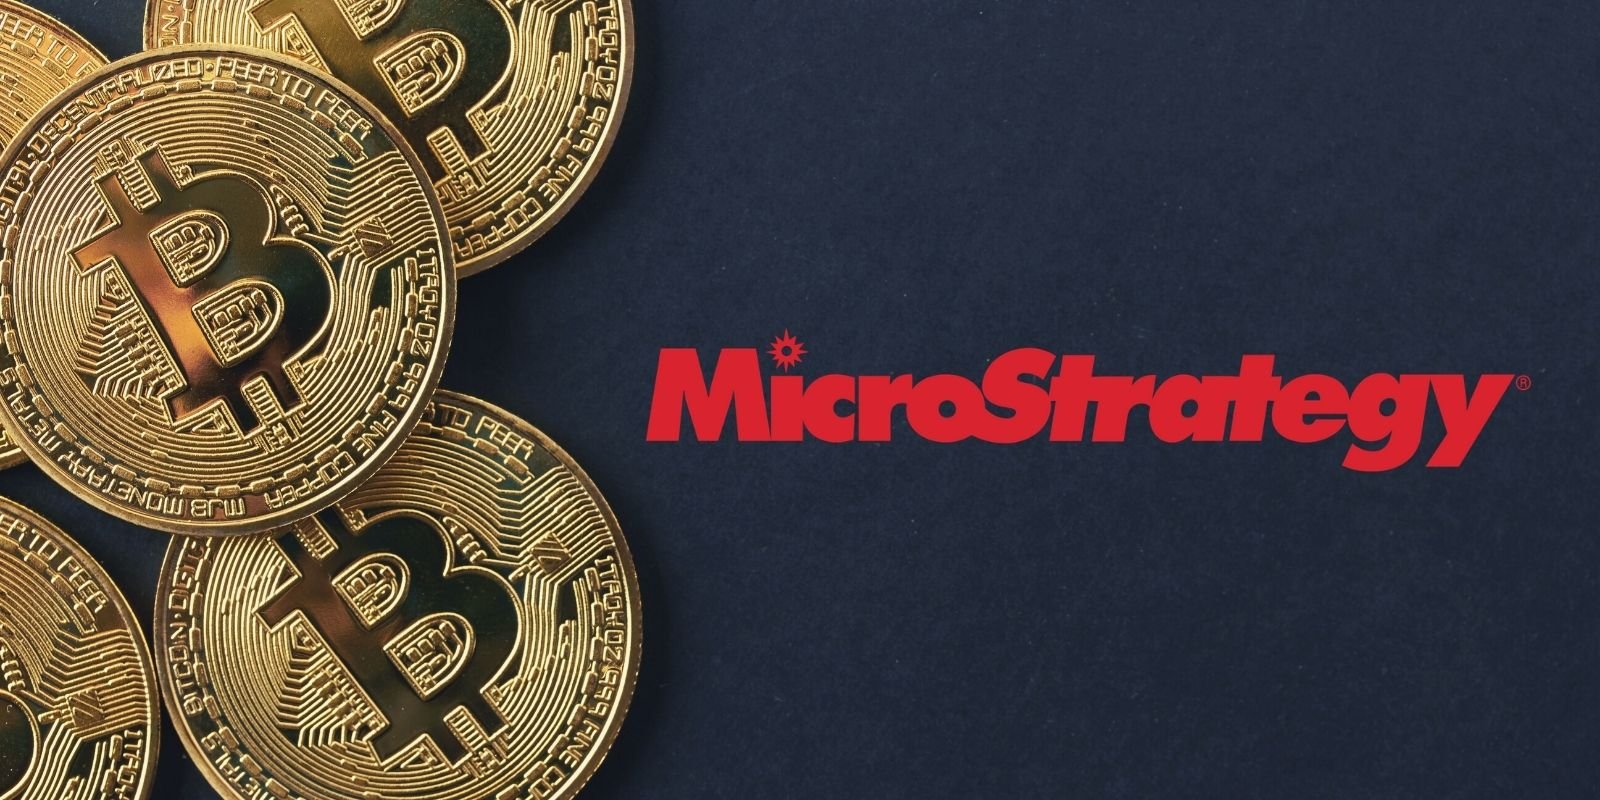 MicroStrategy compró Bitcoin para evitar la liquidación, revela Peter Schiff